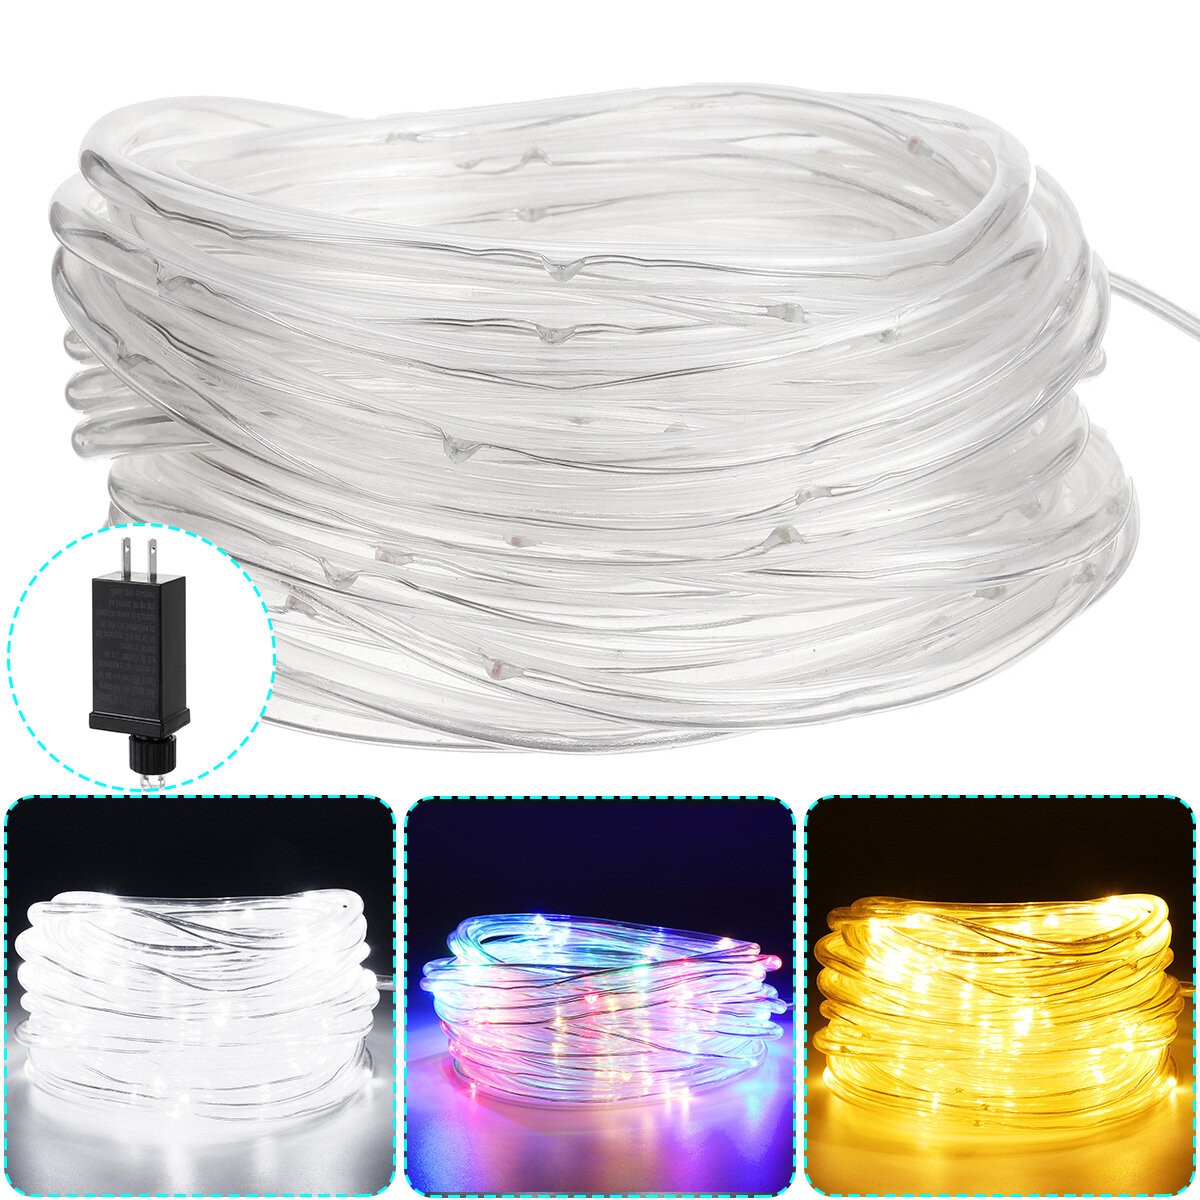 10M 100LED Outdoor Tube Rope Strip String Light RGB Lamp Xmas Home Decor Lights met US Plug